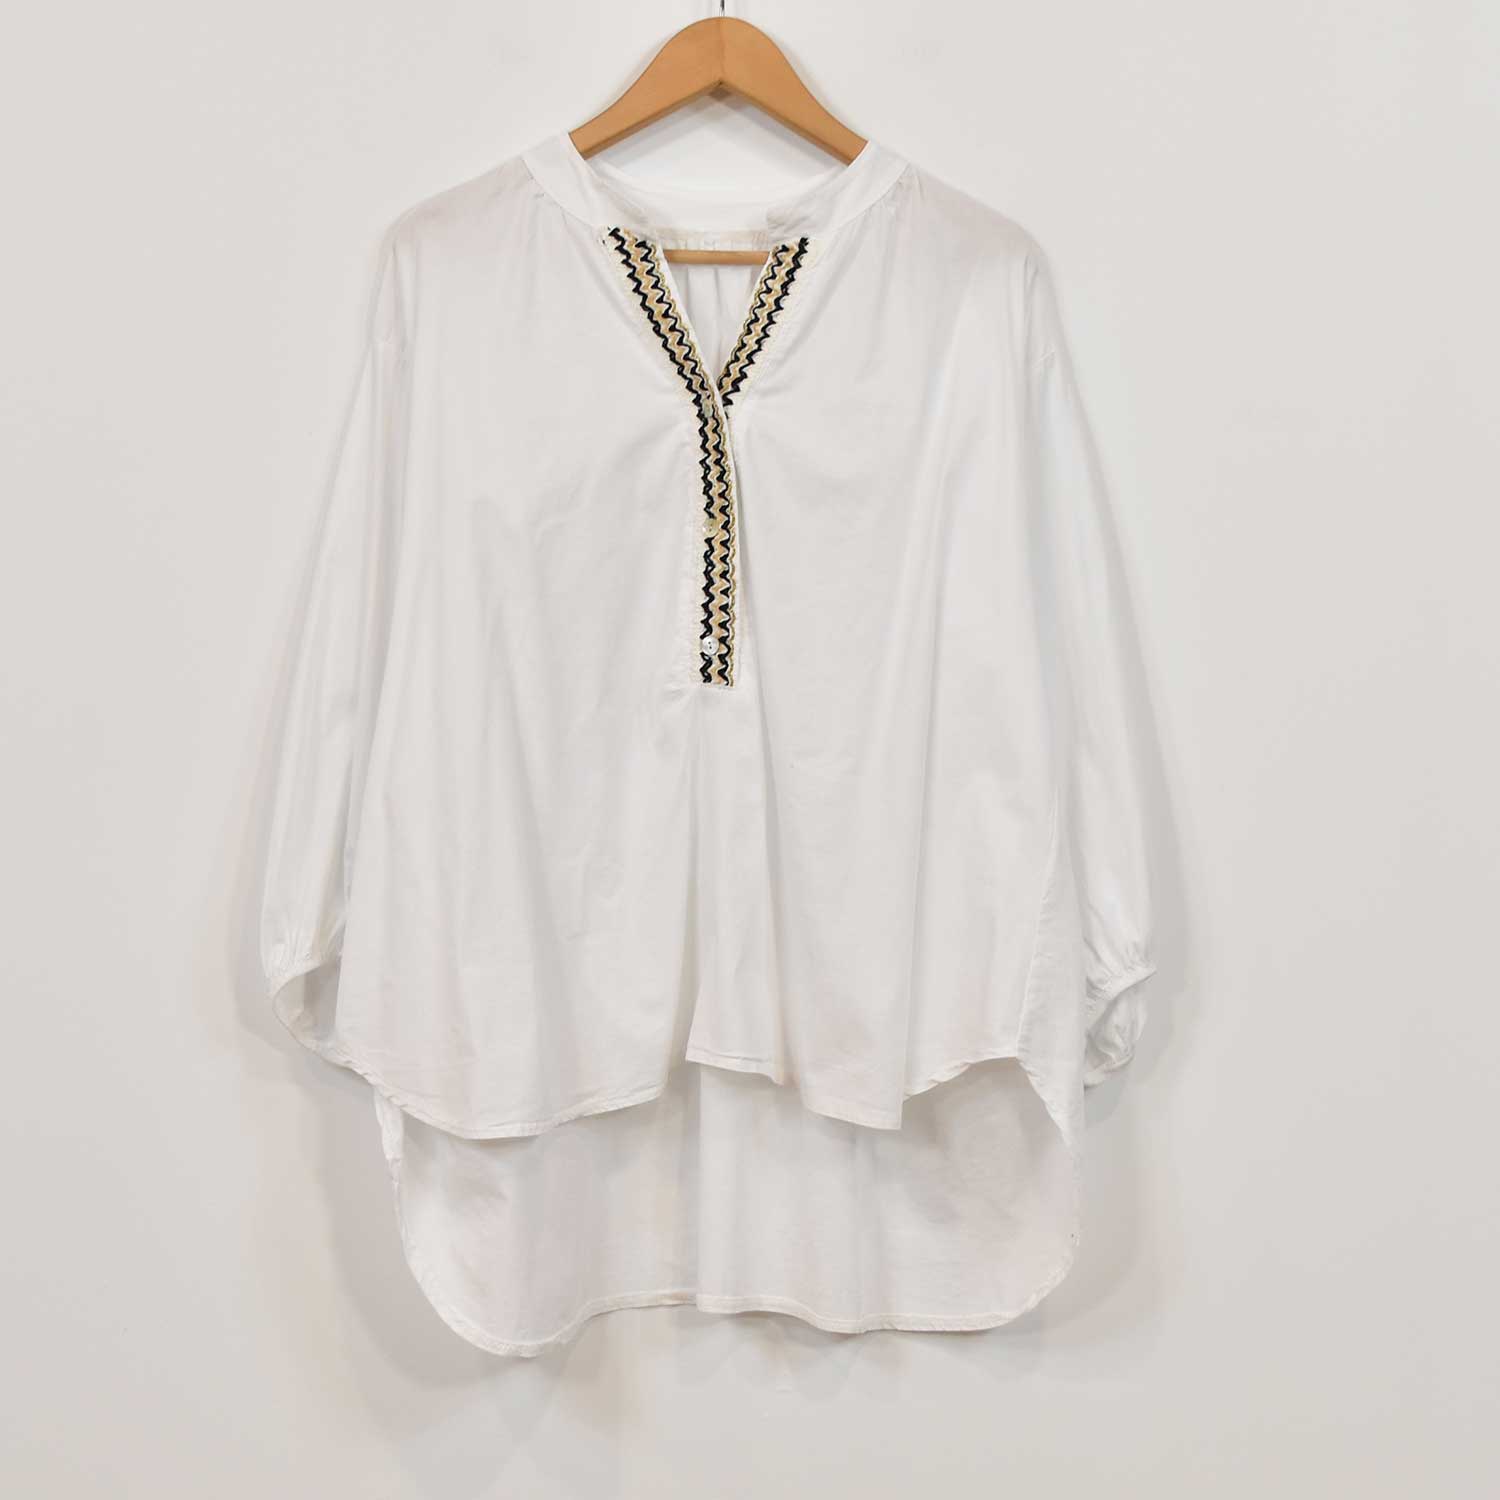 White border blouse